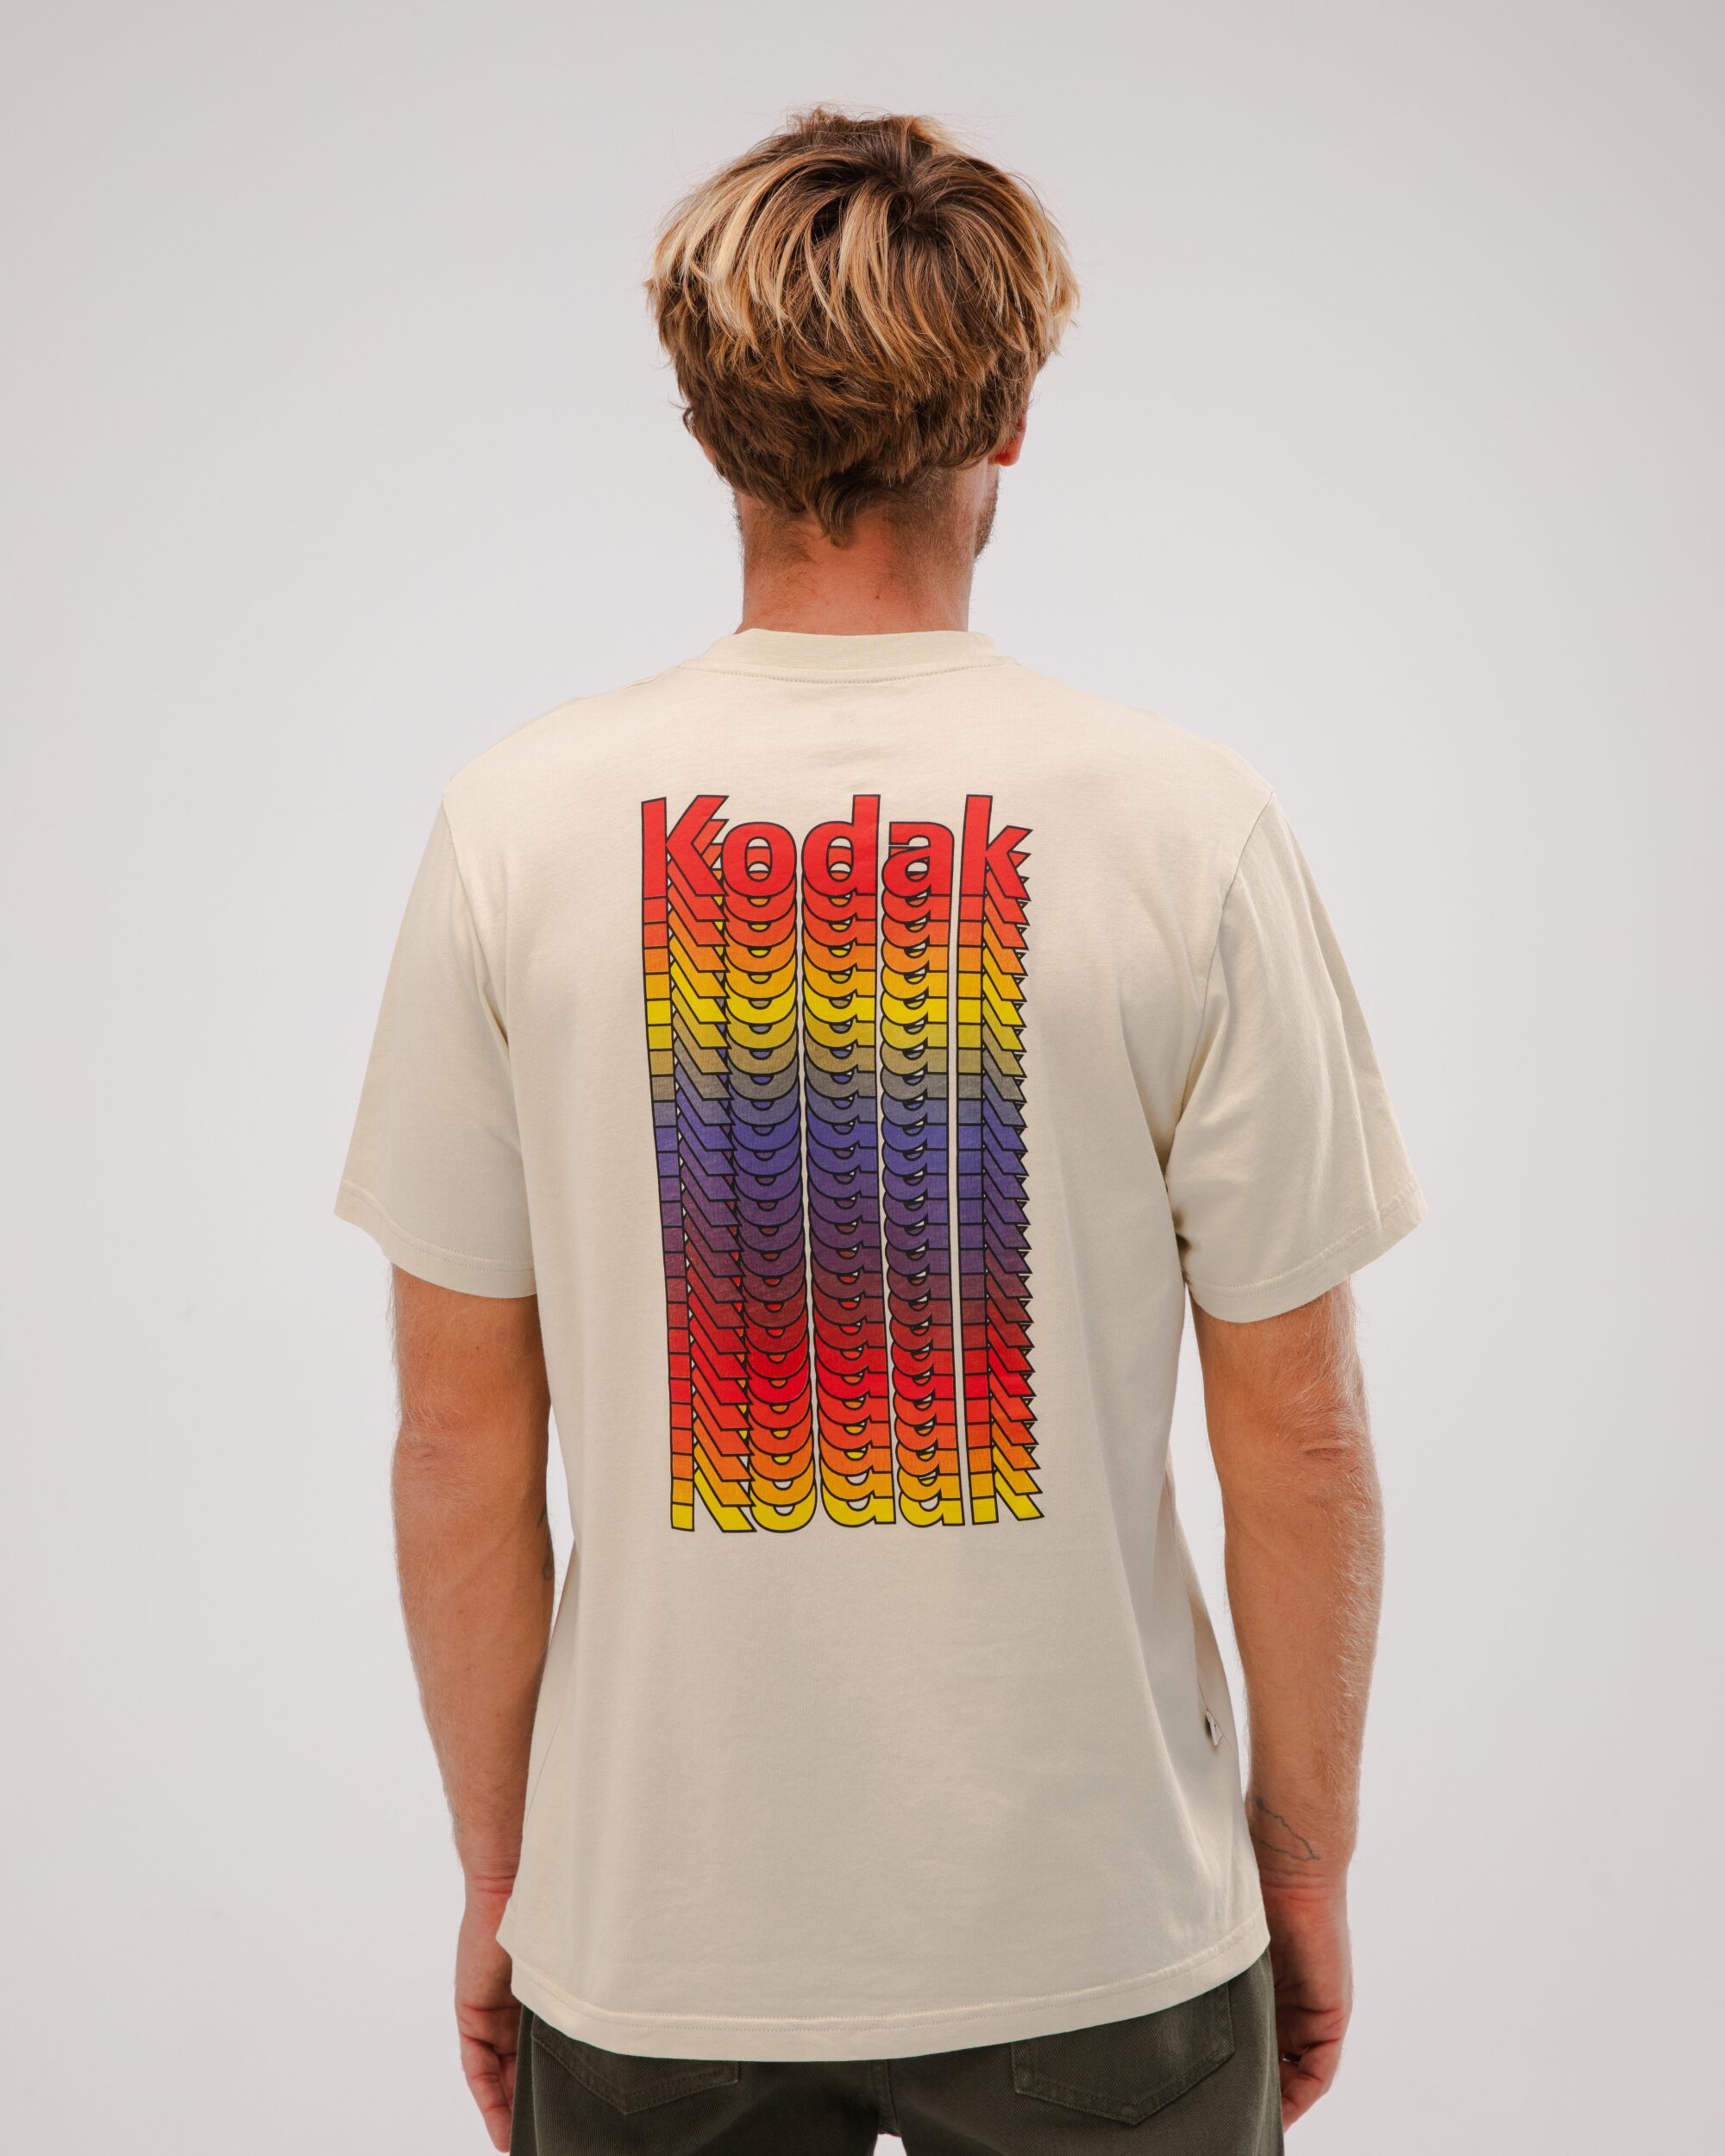 Kodak T-shirt Sand made from organic cotton by Brava Fabrics